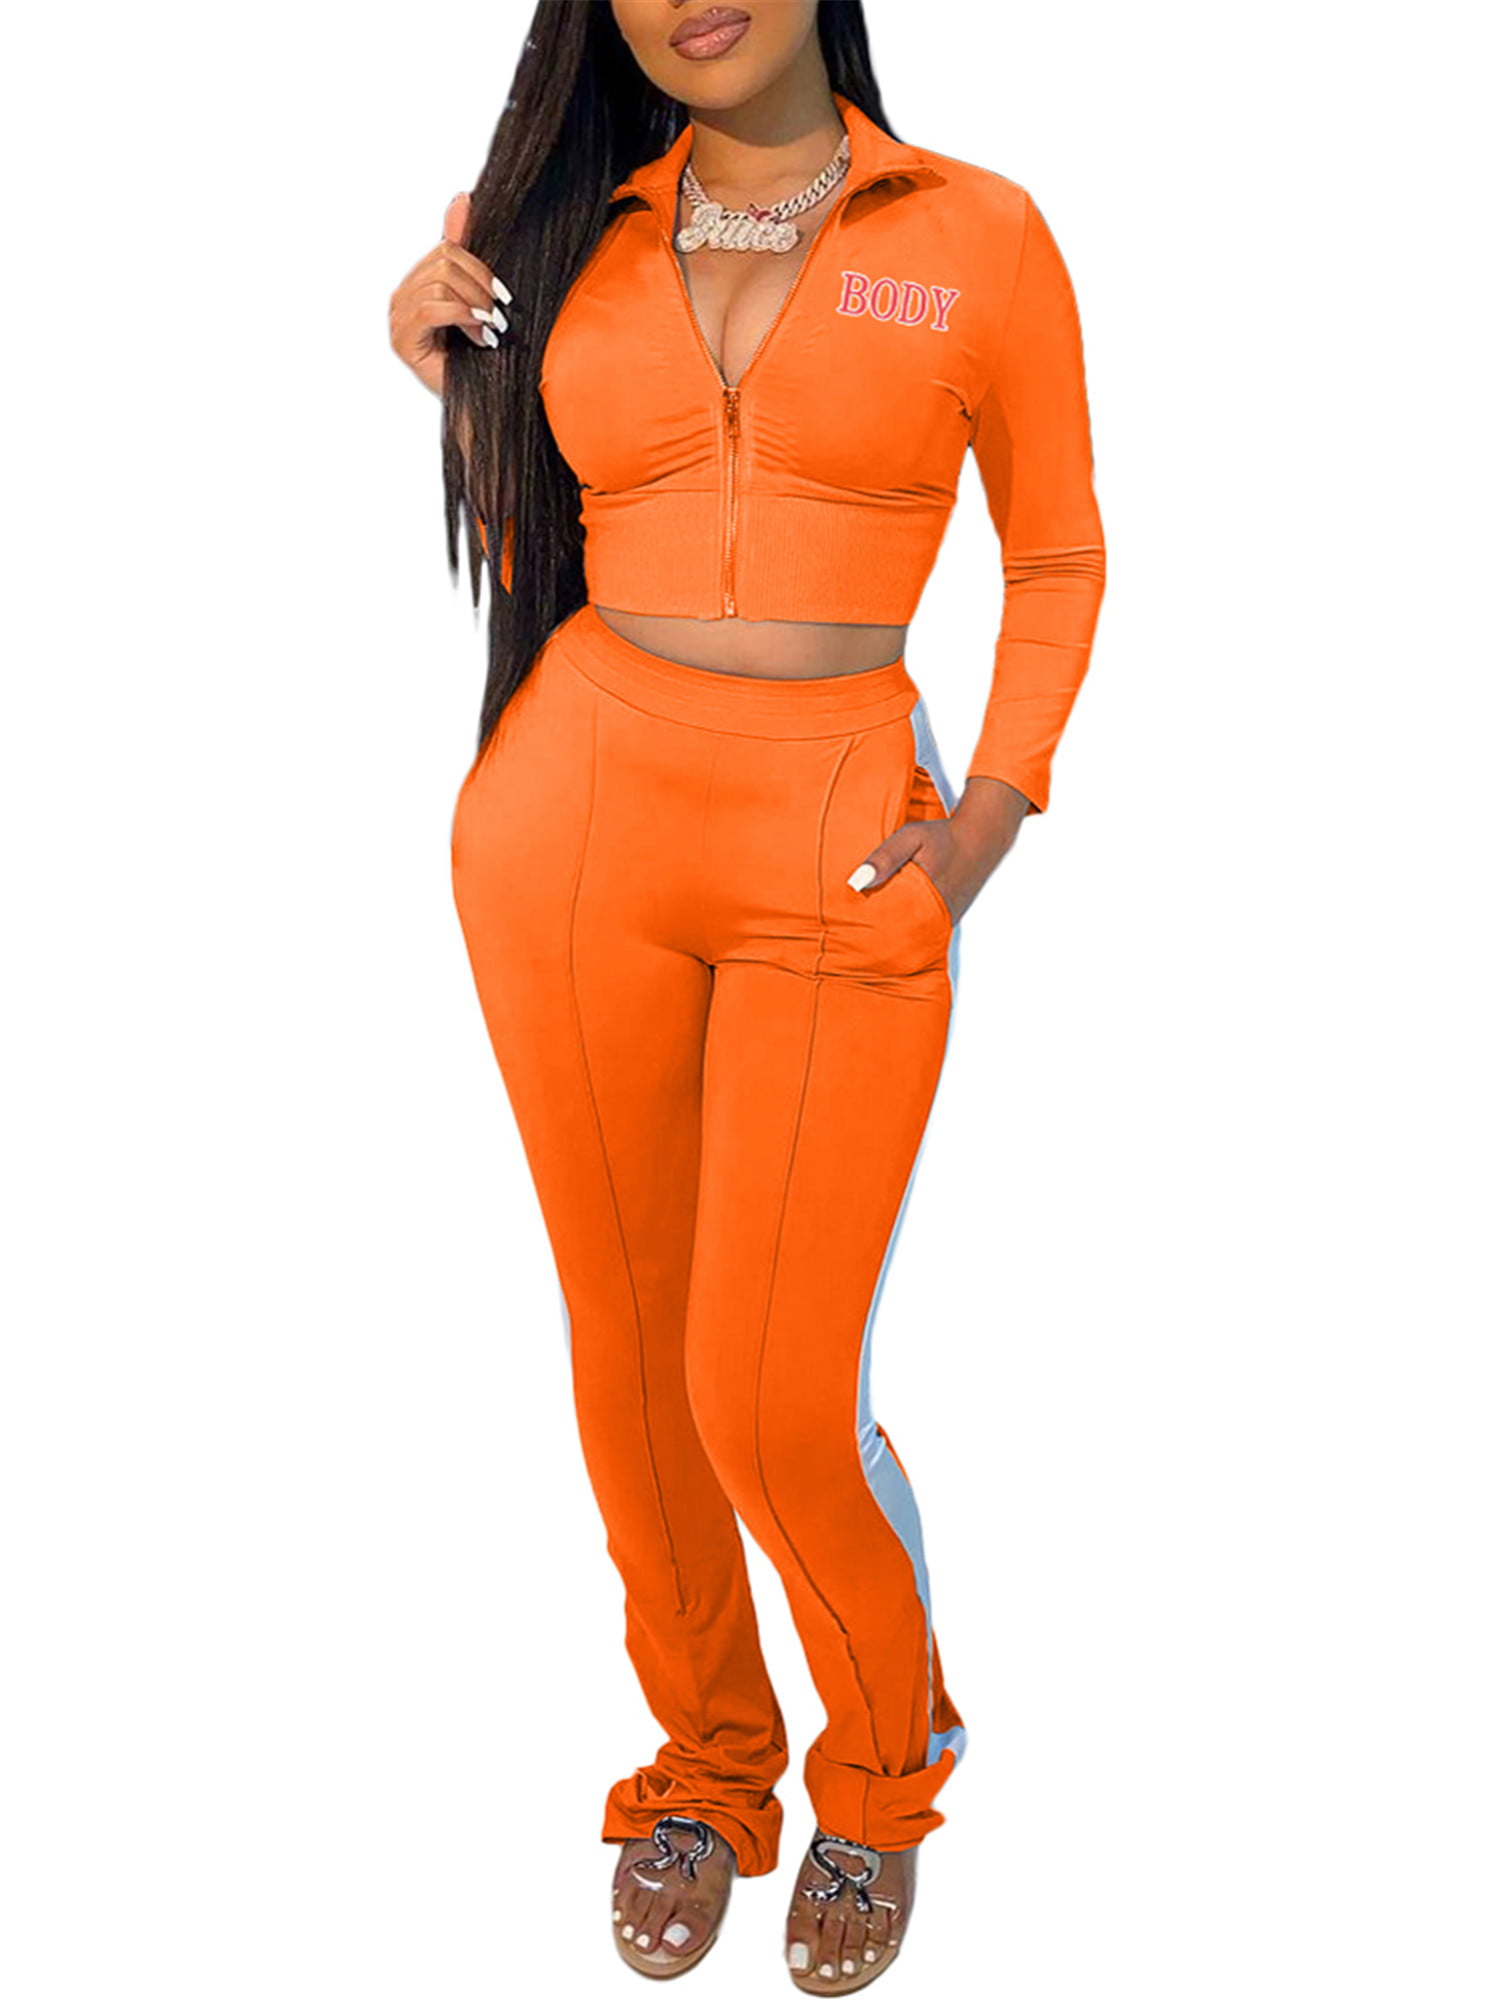 Women/'s Fashion 2 Piece Jogging Sets Solid Color Letter Printing Long Sleeve Top Bodycon Pants Suit